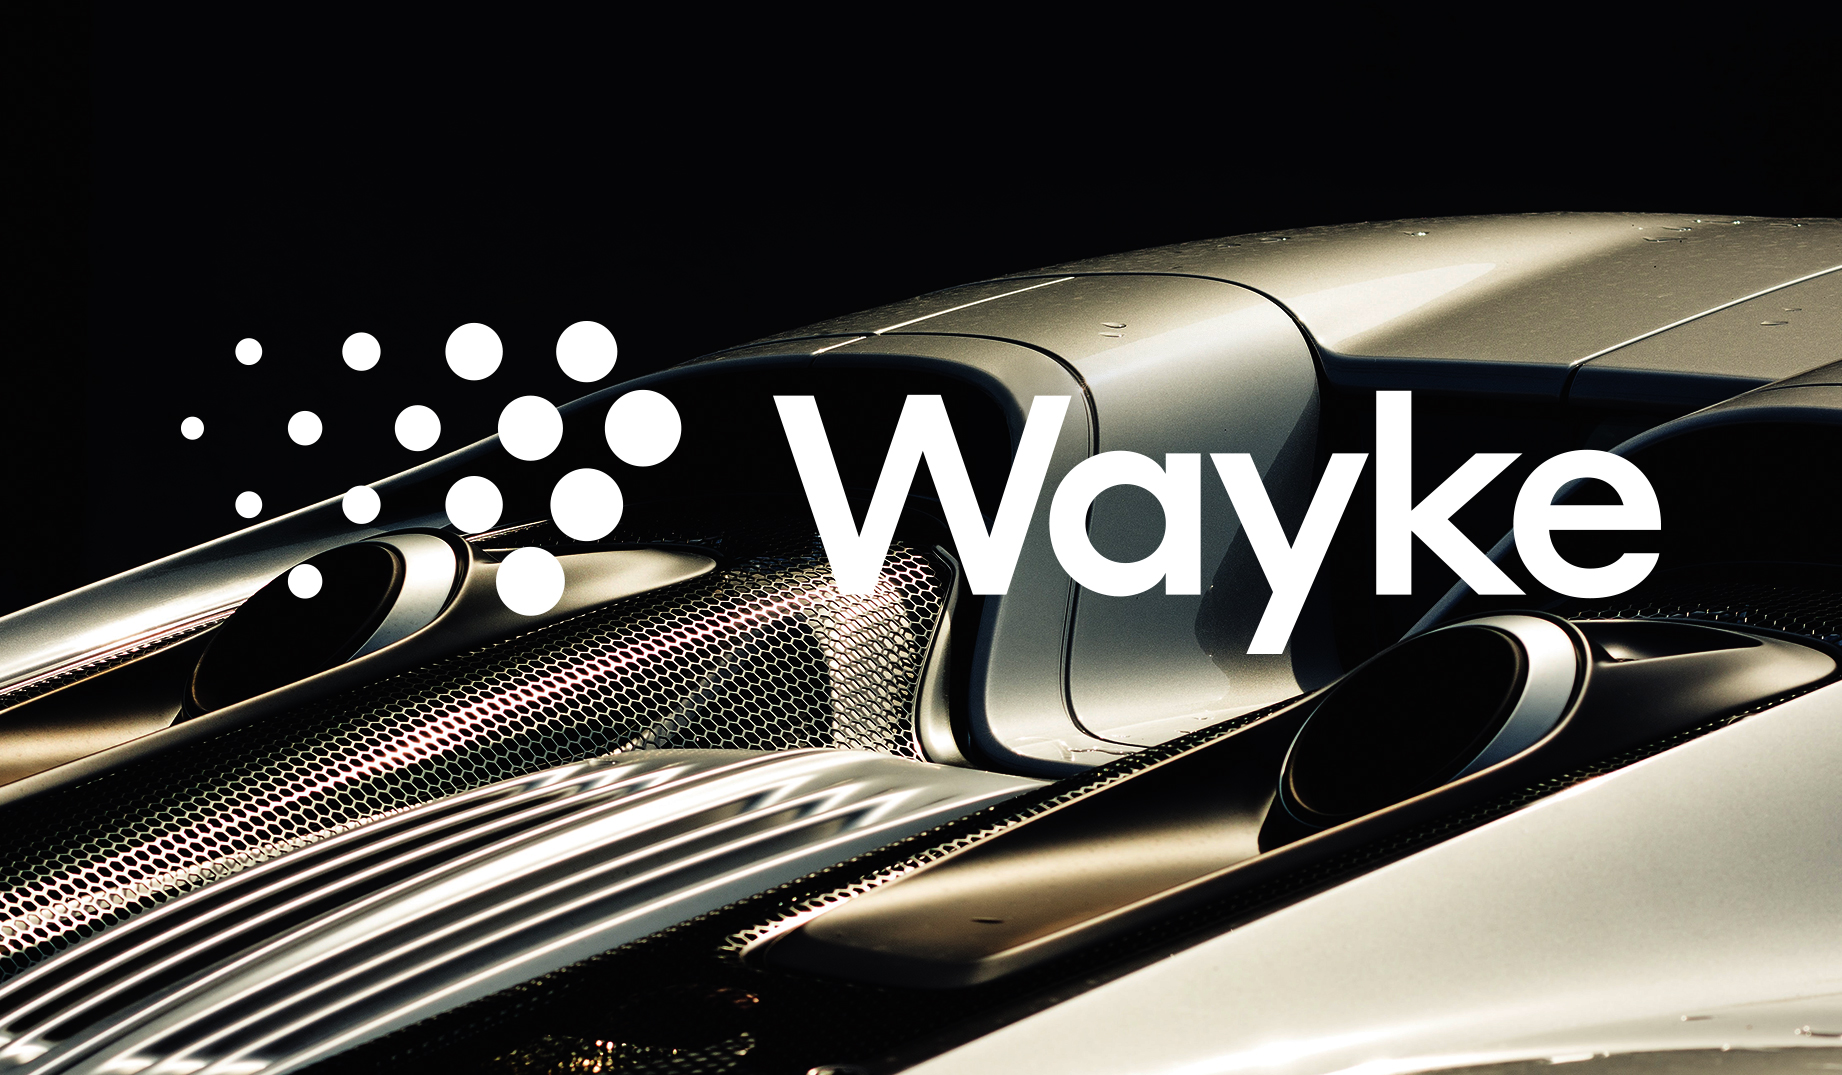 Wayke [film]